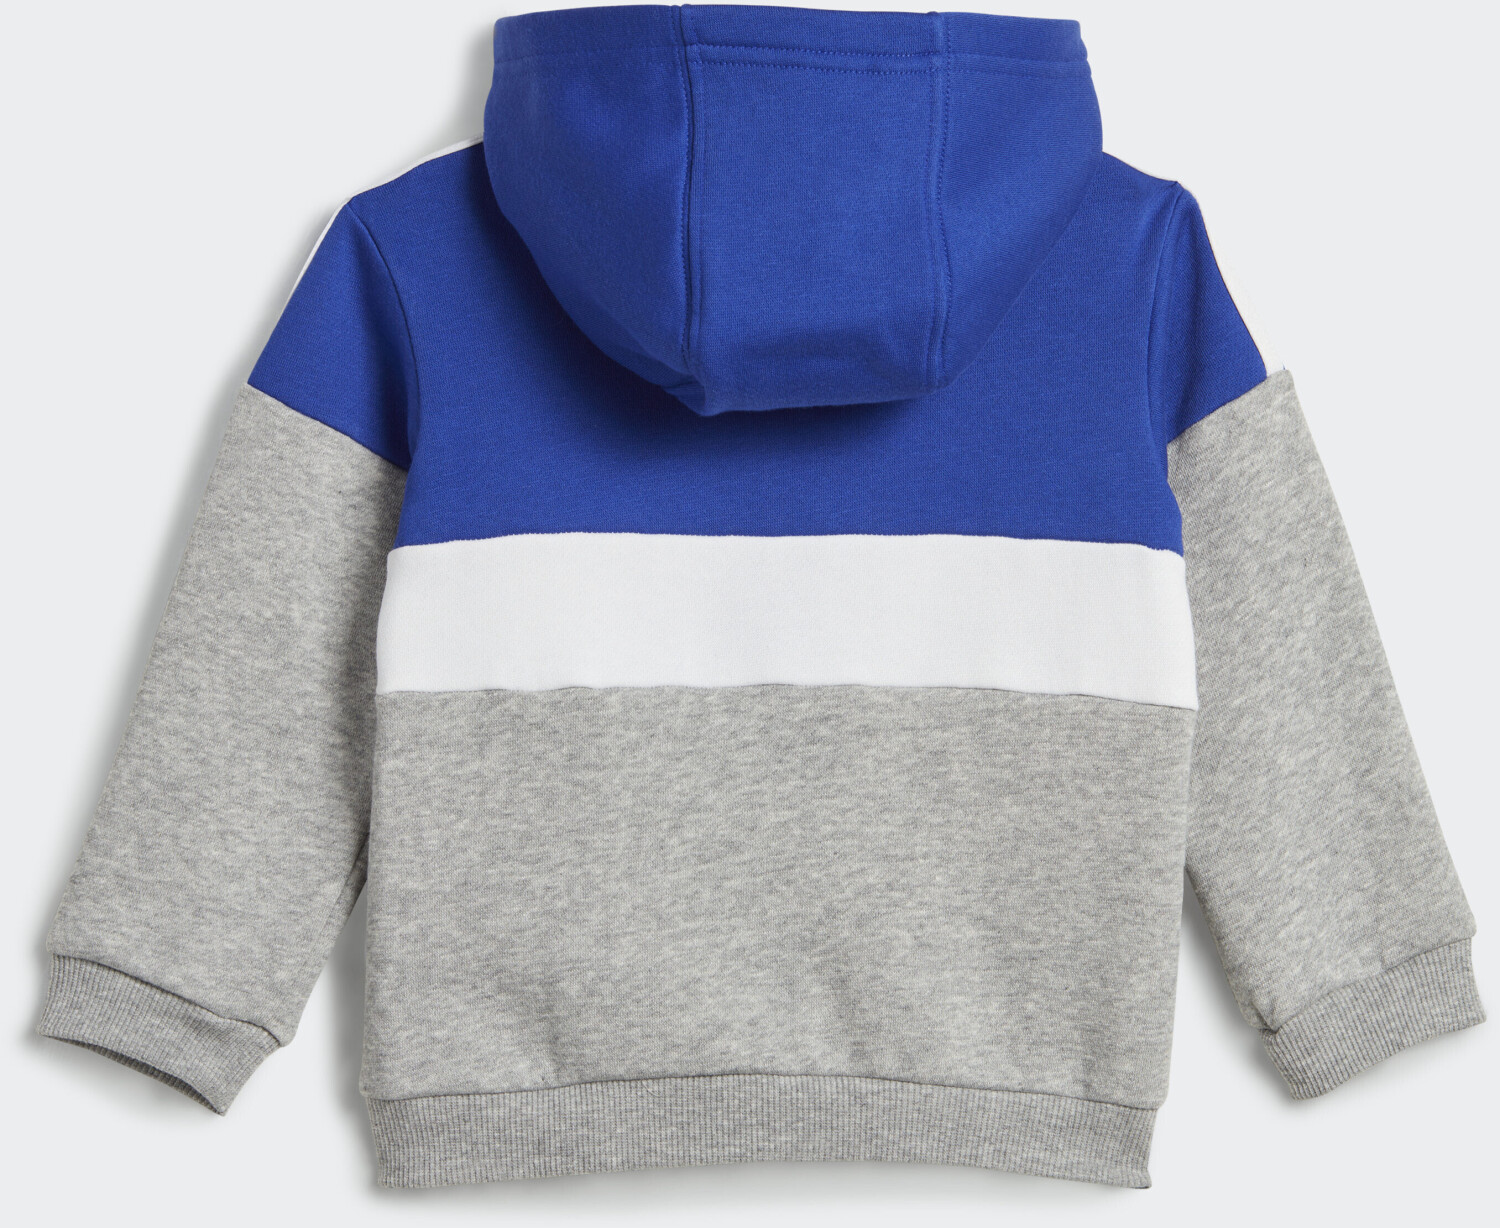 Suit Adidas blue/white/medium 3-Stripes grey Tiberio heather € Colorblock (IJ6323) Preisvergleich 34,00 Kids | Kids ab Track lucid semi bei